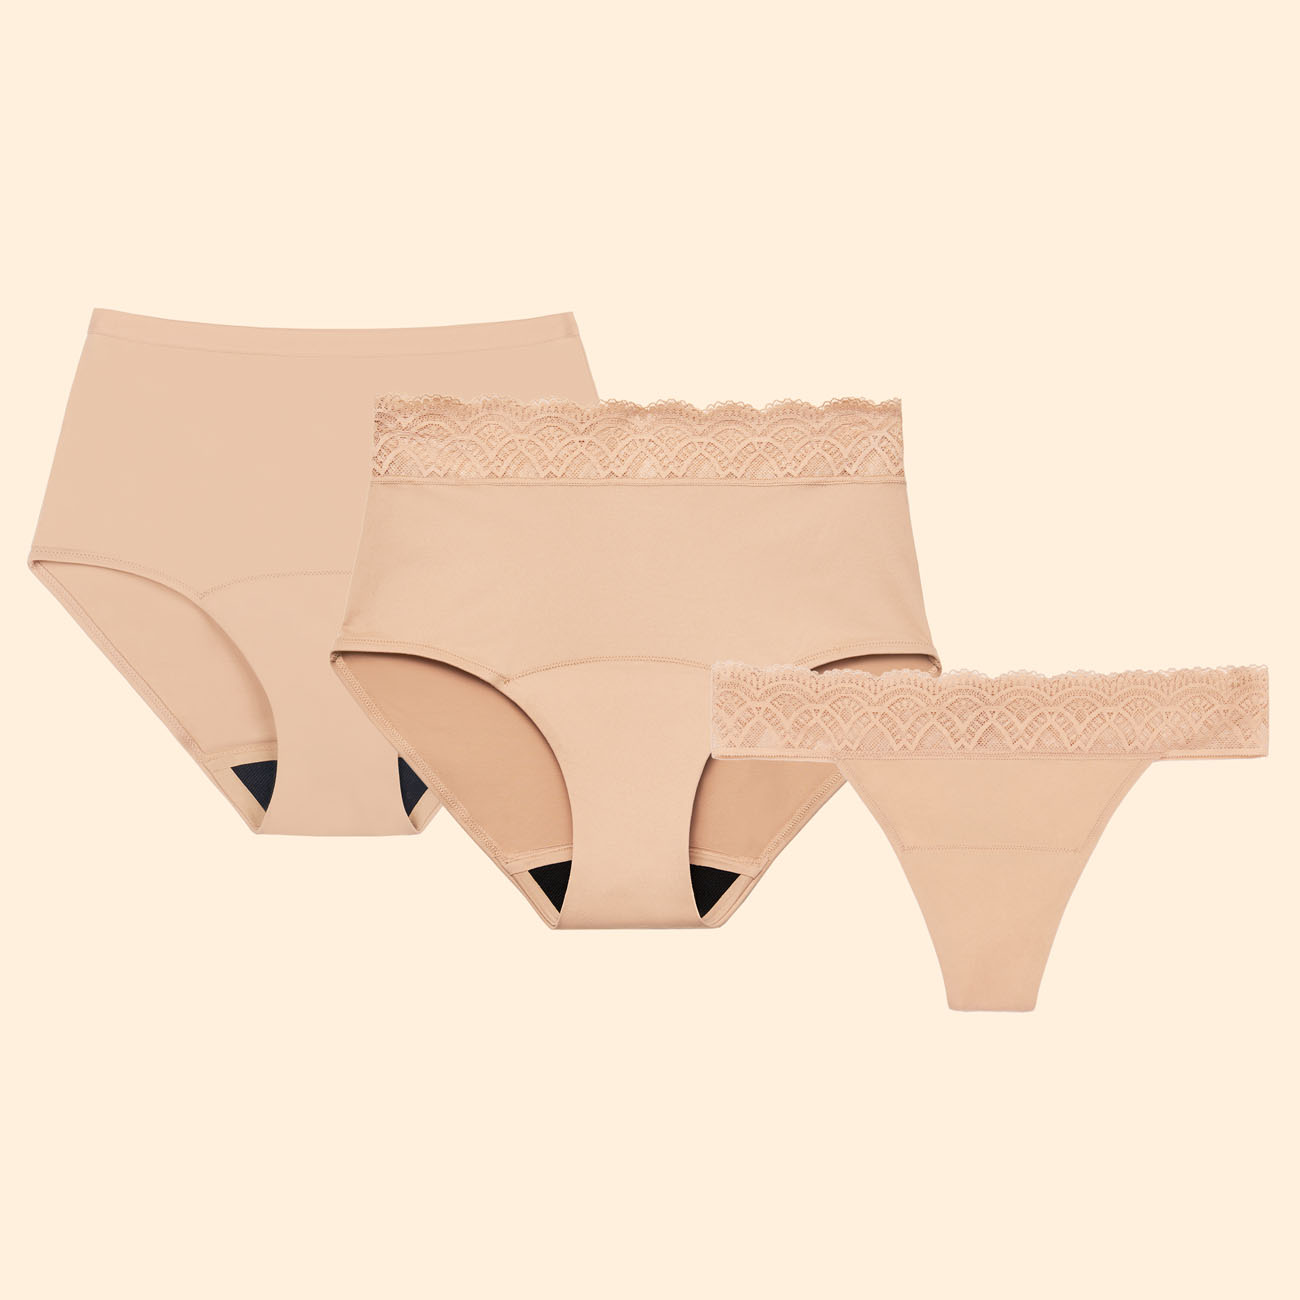 Speax THINX French Cut Incontinence Underwear Bladder Protection